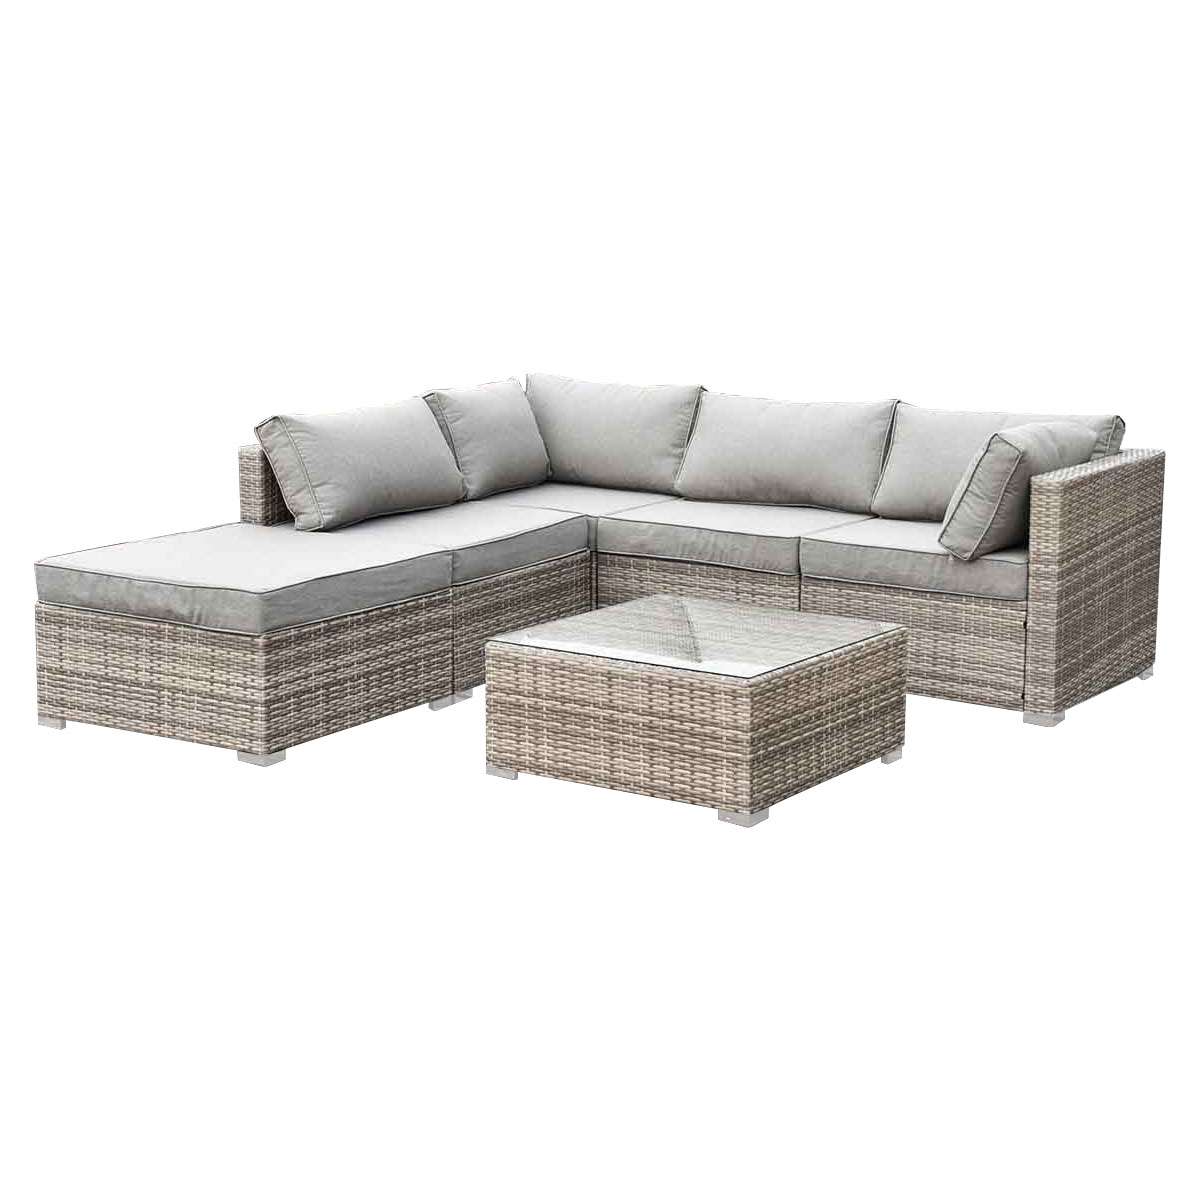 6 Pieces Outdoor Furniture Rattan Set Sofa Lounge Table ...